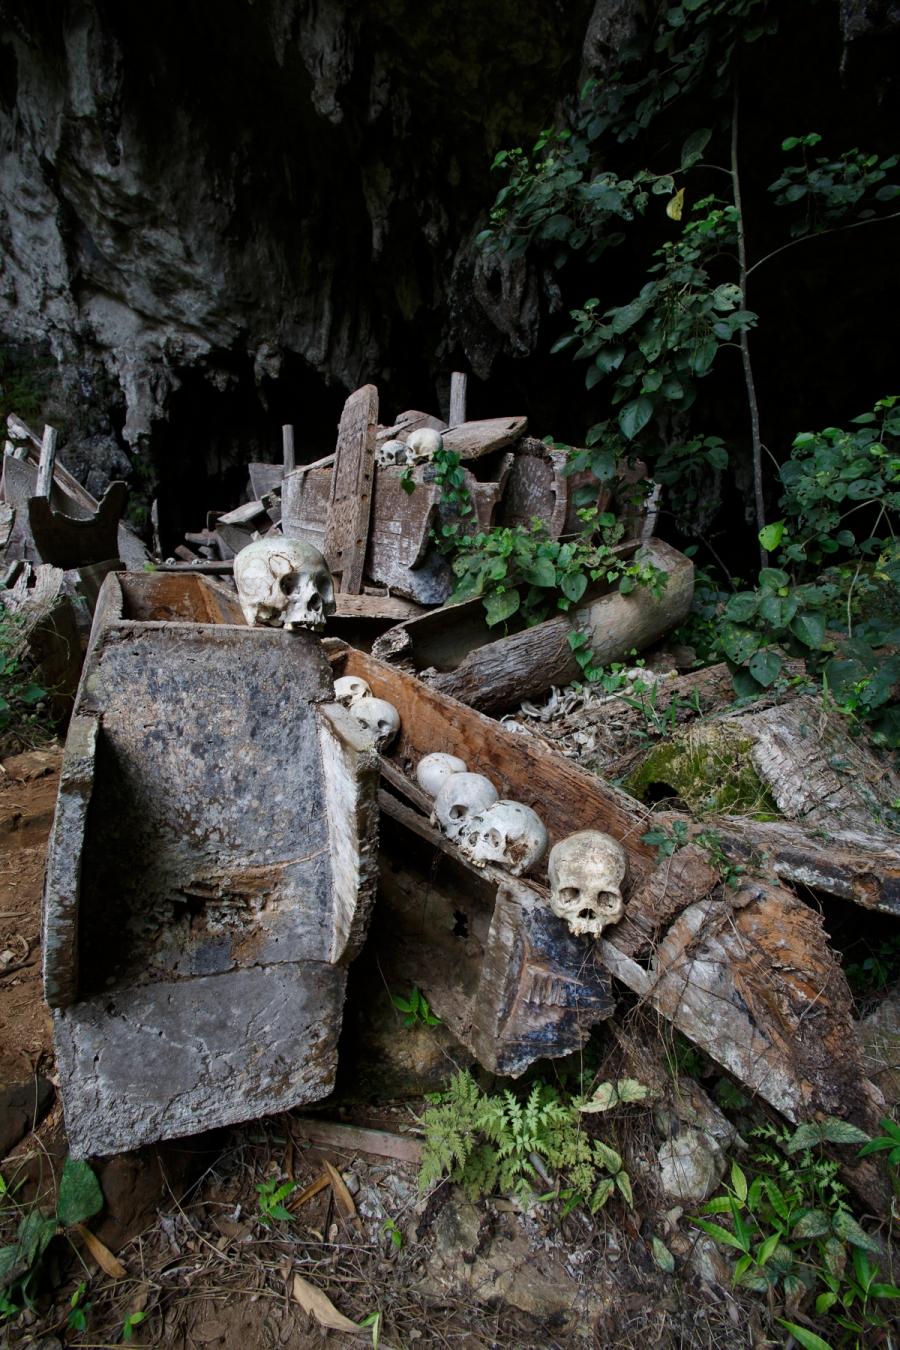 Burial cave, Tana Toraja, Sulawesi, Indonesia Paul Koudounaris by permission